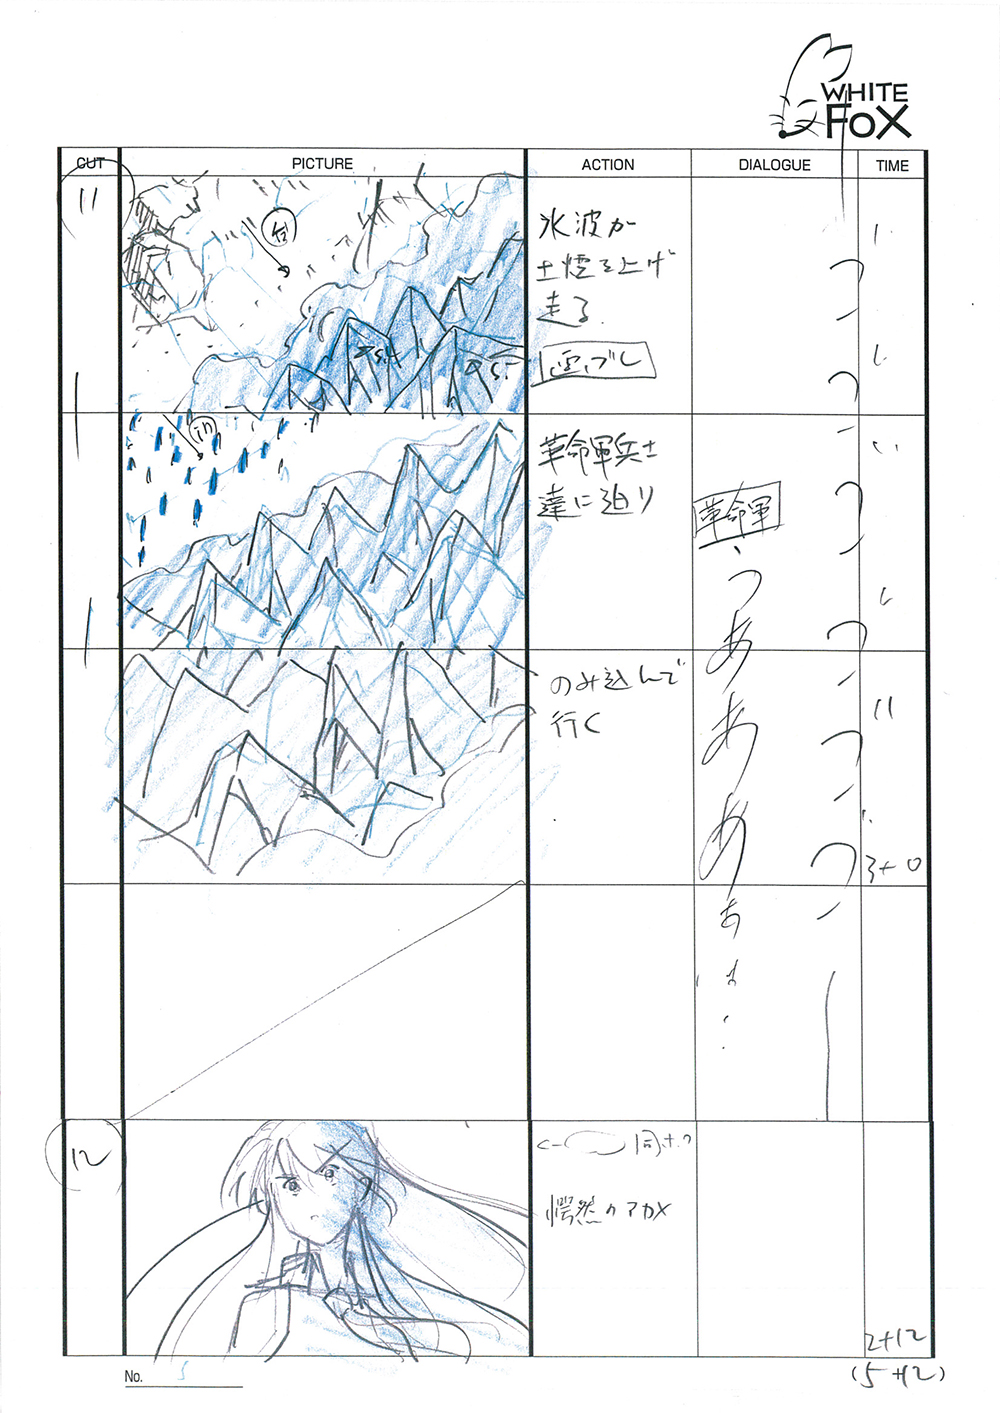 Akame ga Kill Episode 24 Storyboard Leak 007